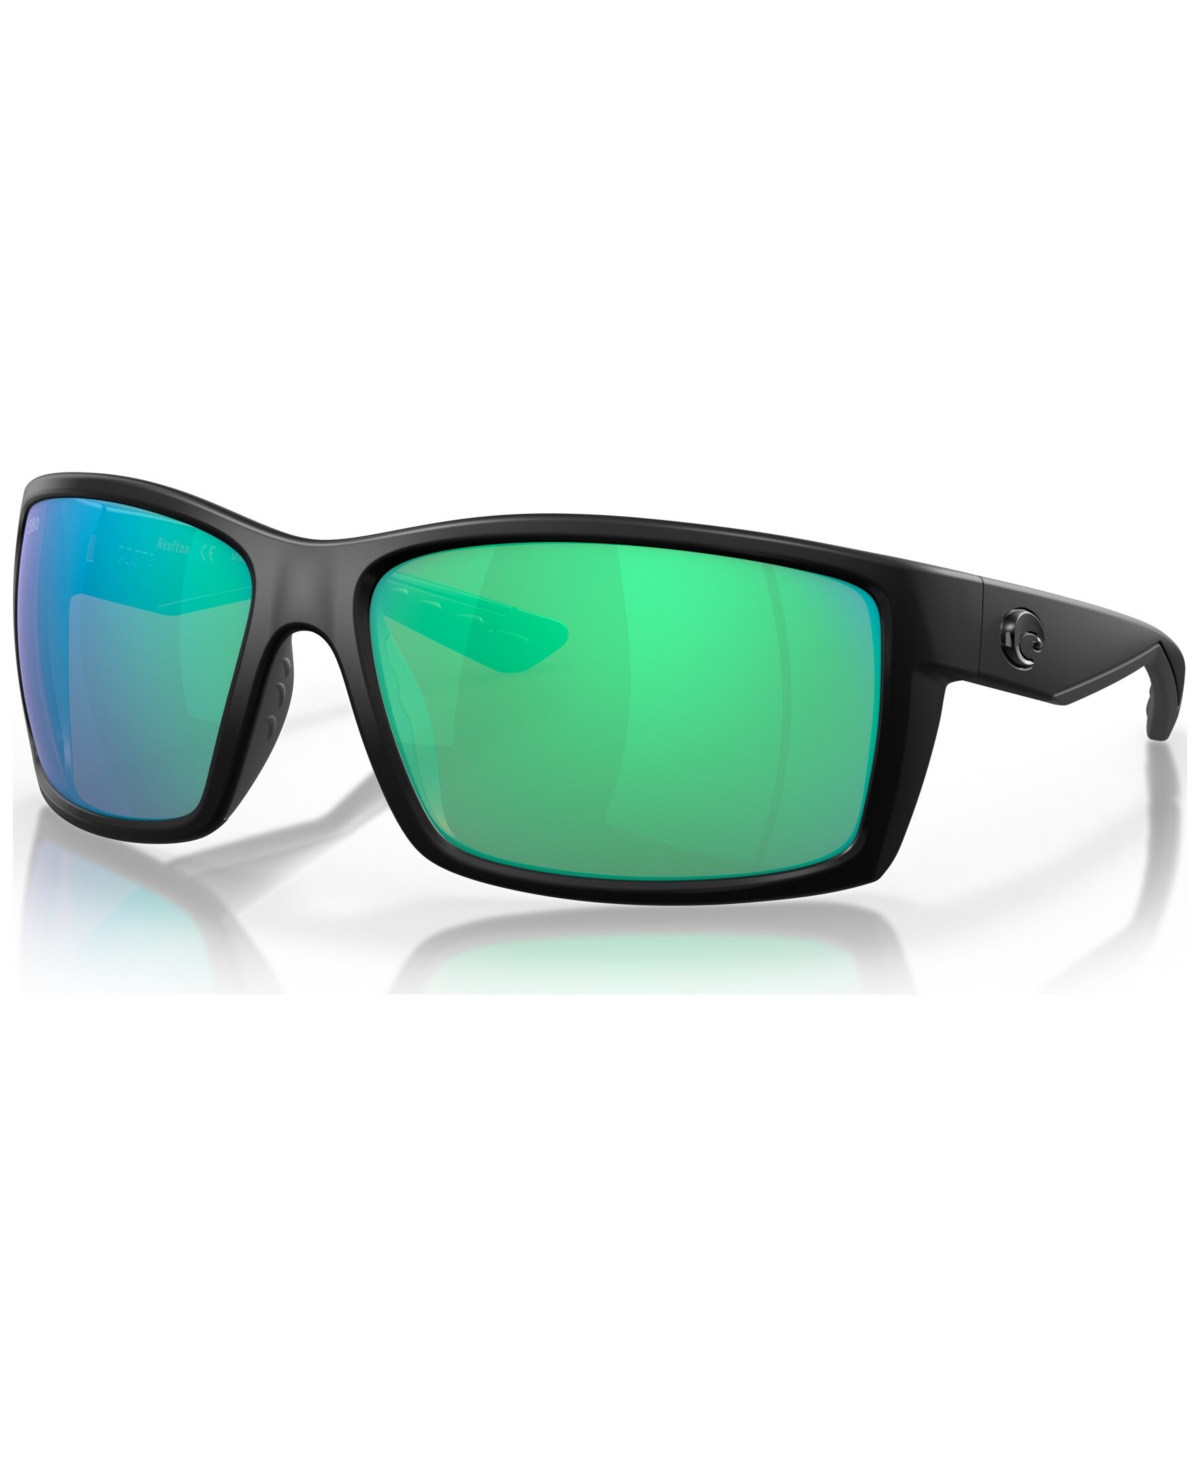 Men's Polarized Sunglasses, Reefton - Blackout